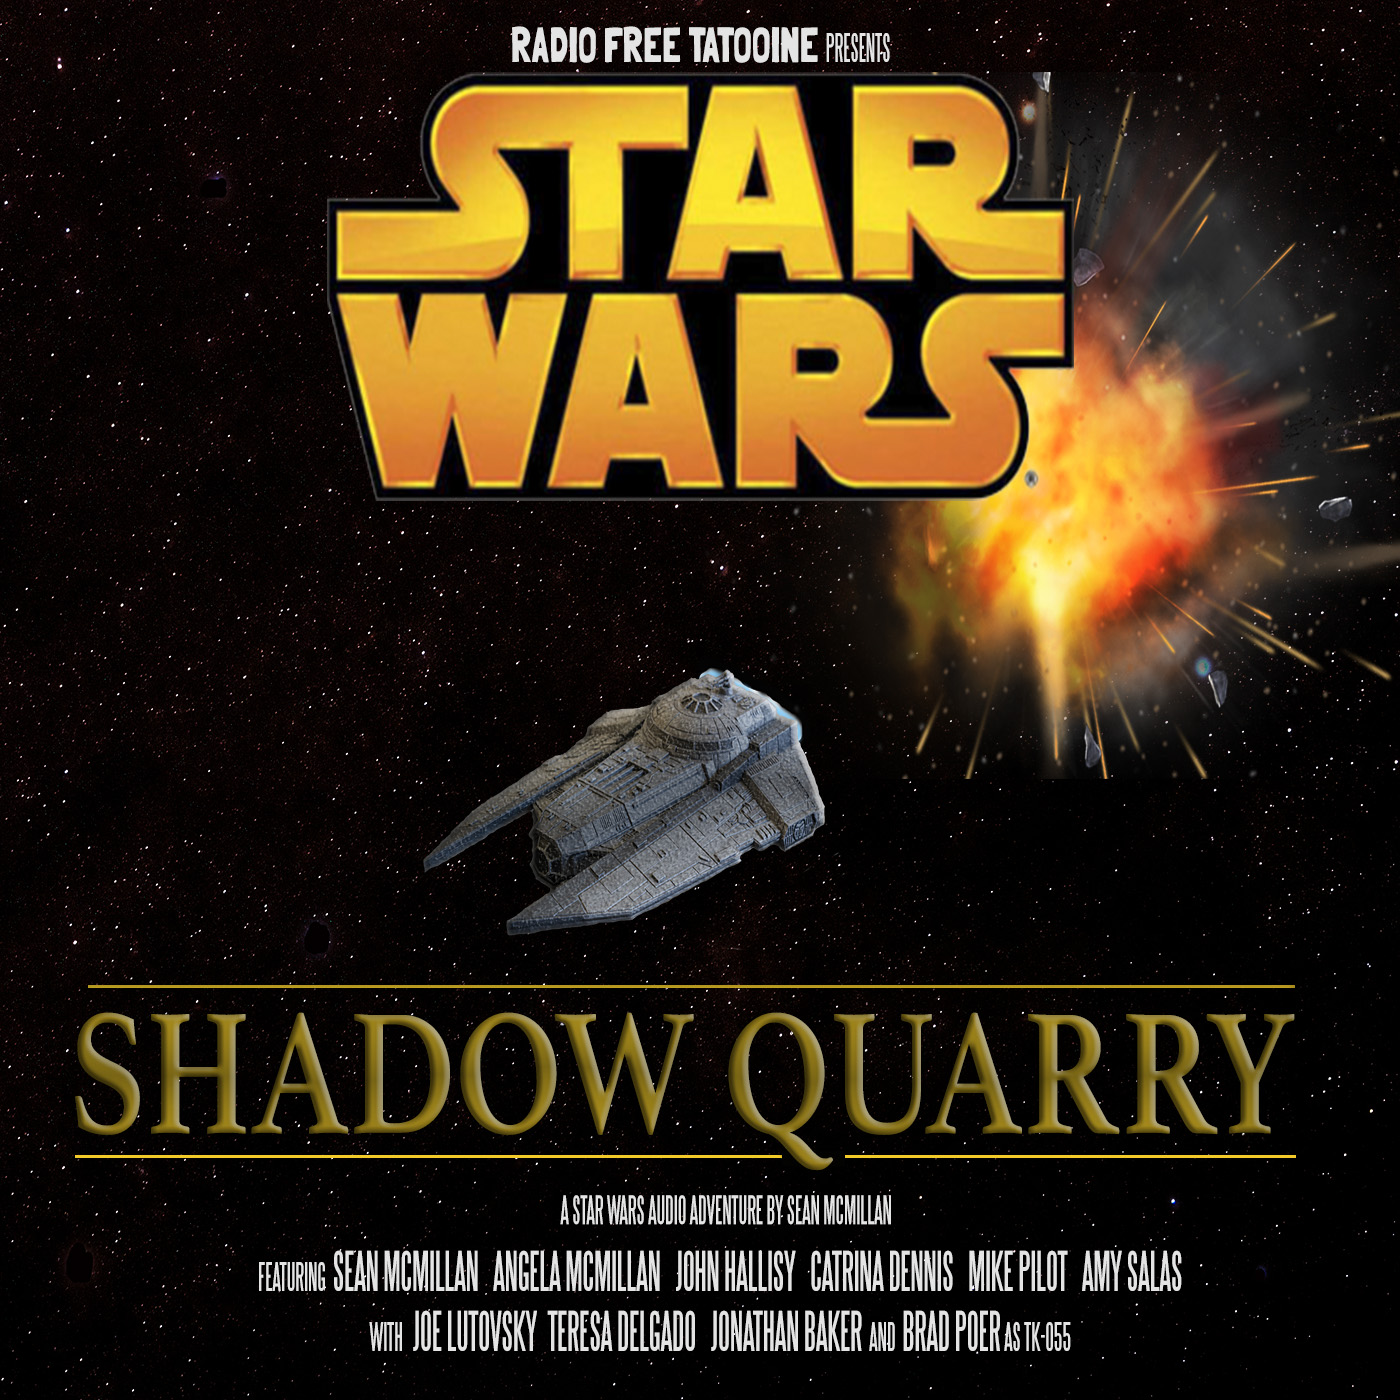 RFT presents: Star Wars - Shadow Quarry